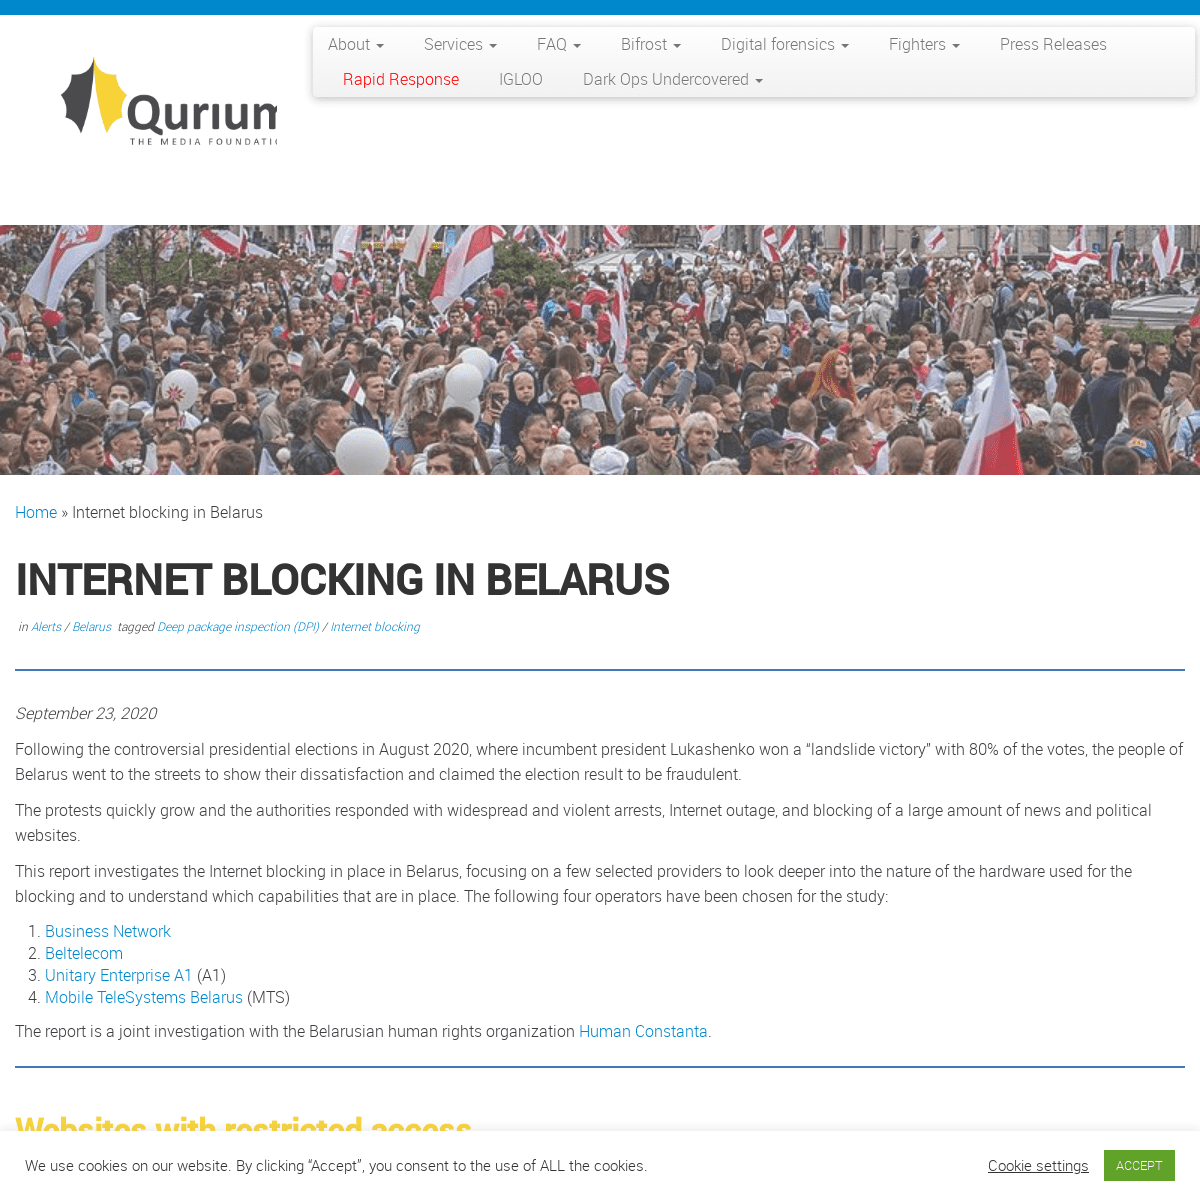 A complete backup of https://www.qurium.org/alerts/belarus/internet-blocking-in-belarus/